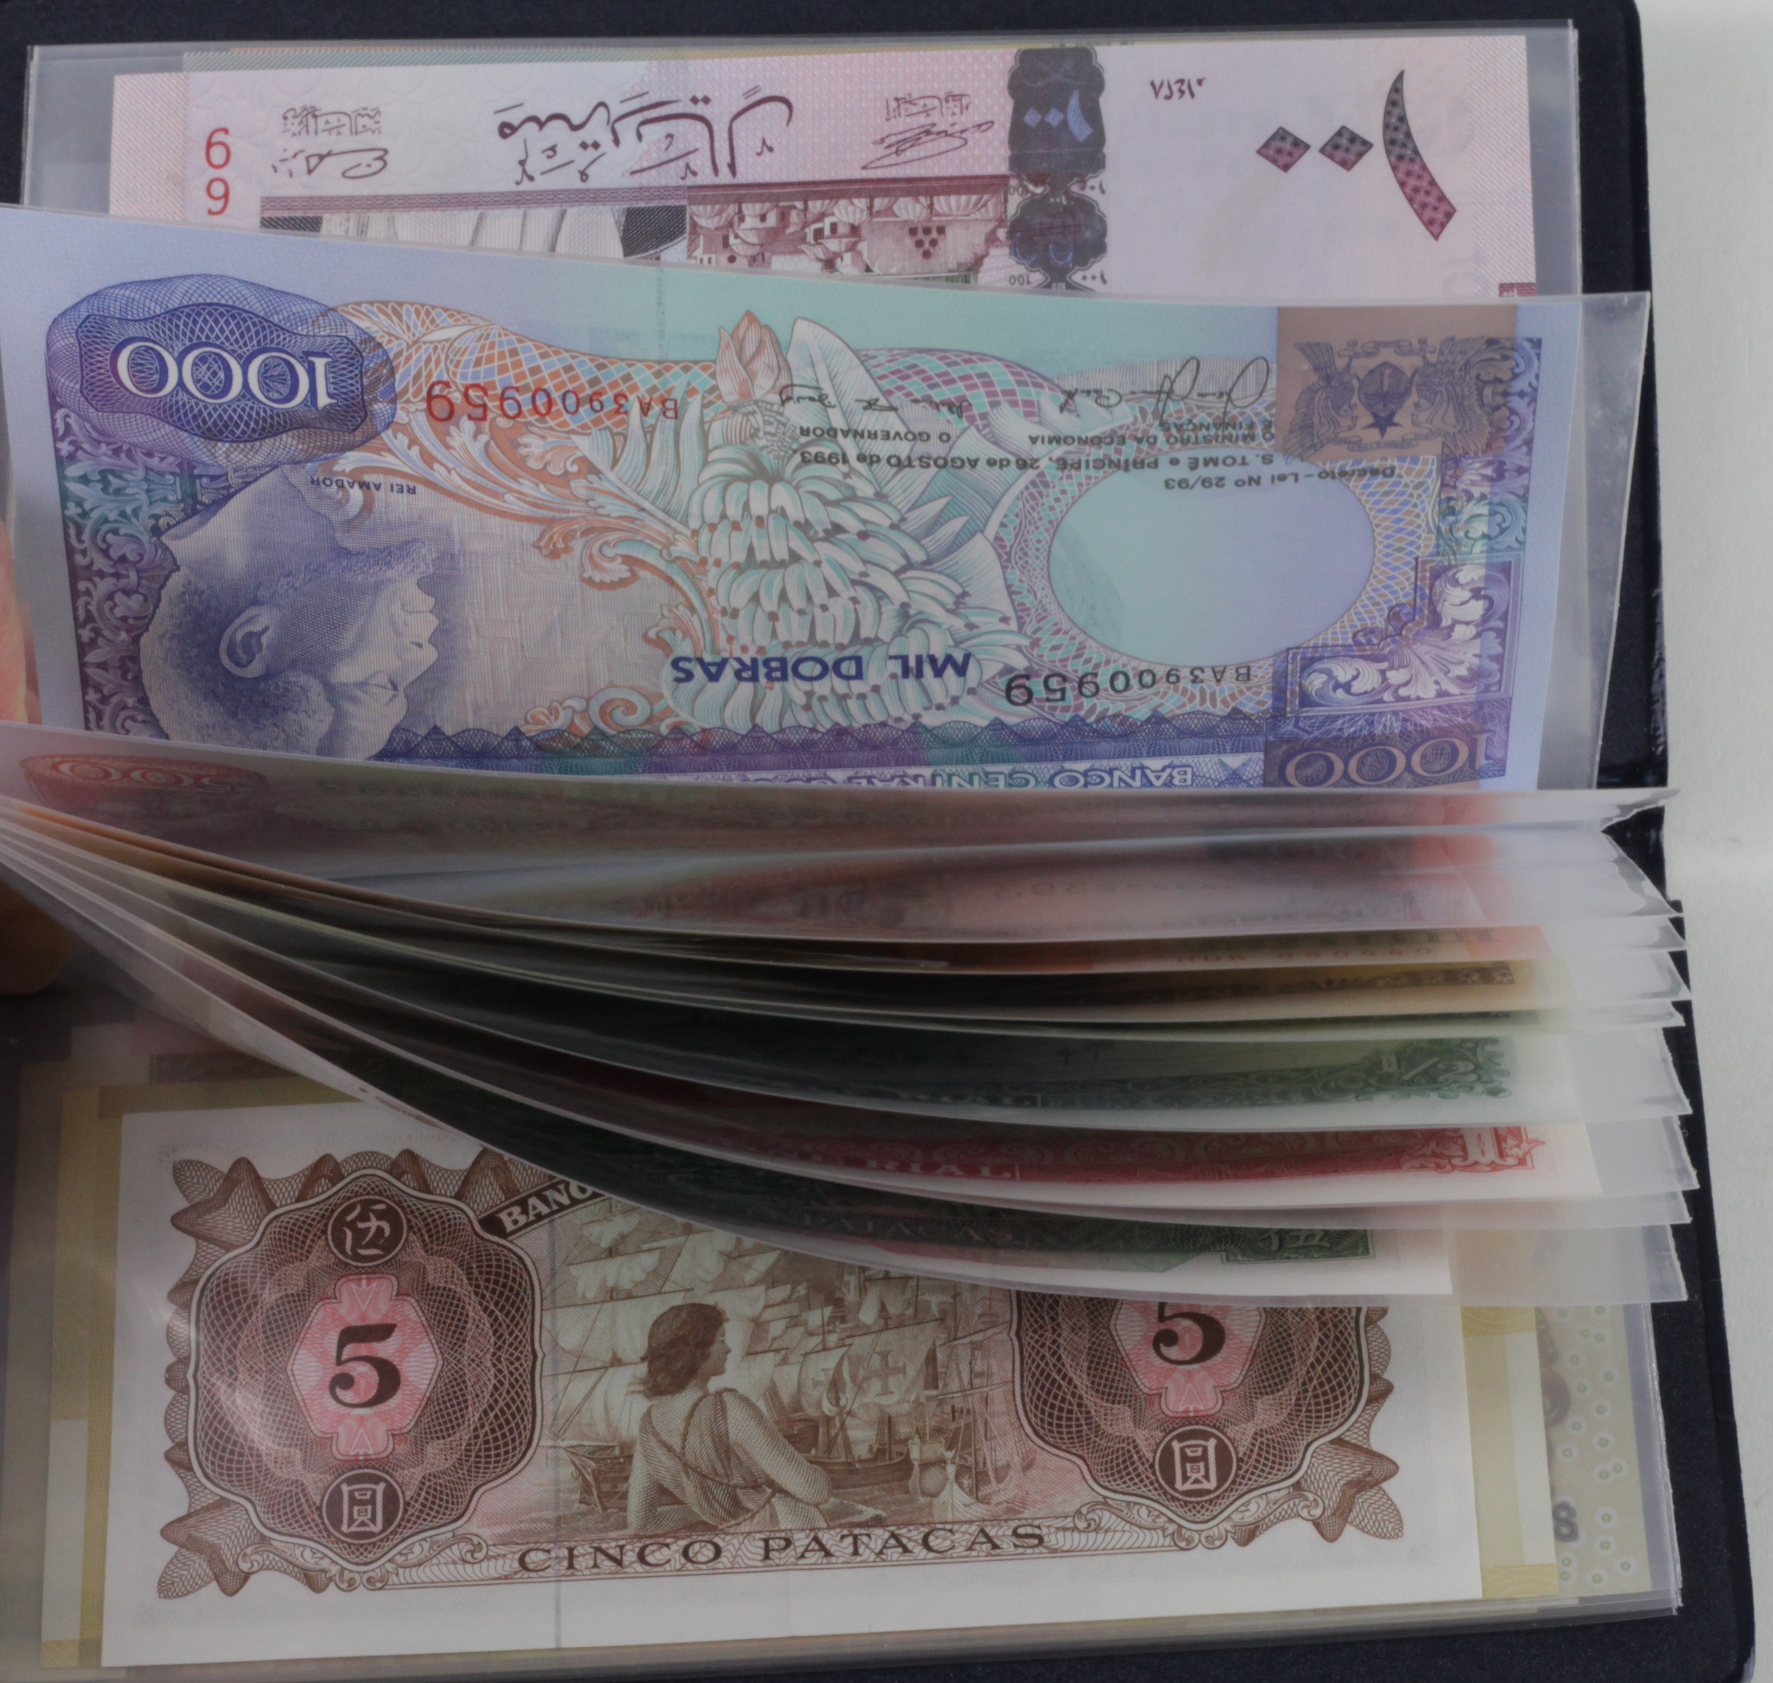 World (22) in small Leuchturm Banknote album, including Korea 50,000 Won (2009), Macau 5 Patacas (